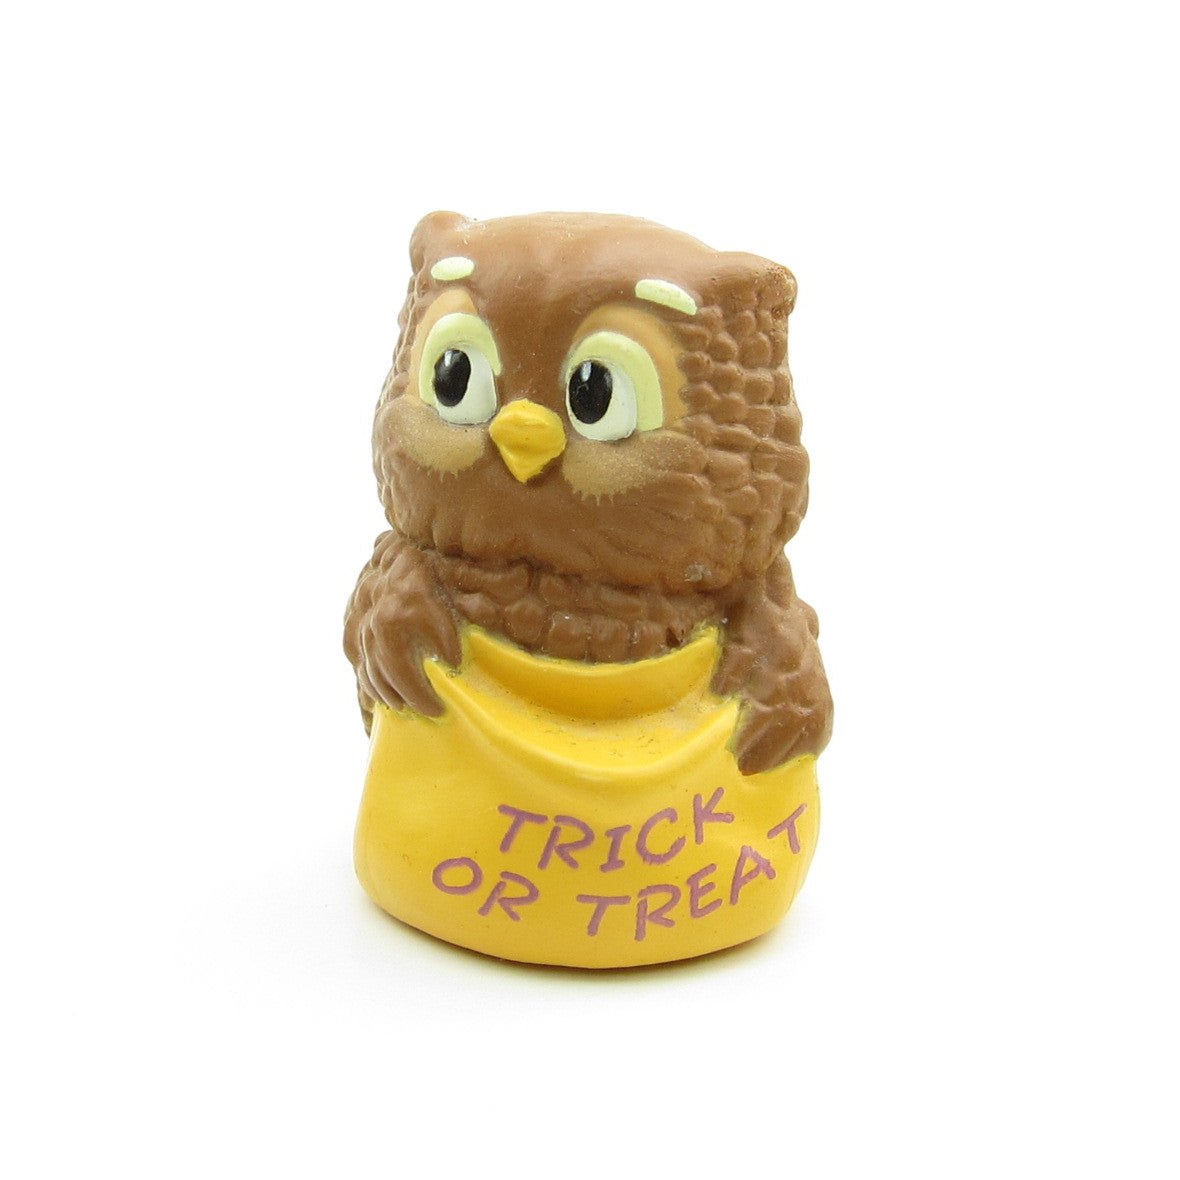 Hallmark trick or treat owl 1988 Merry Miniatures figurine